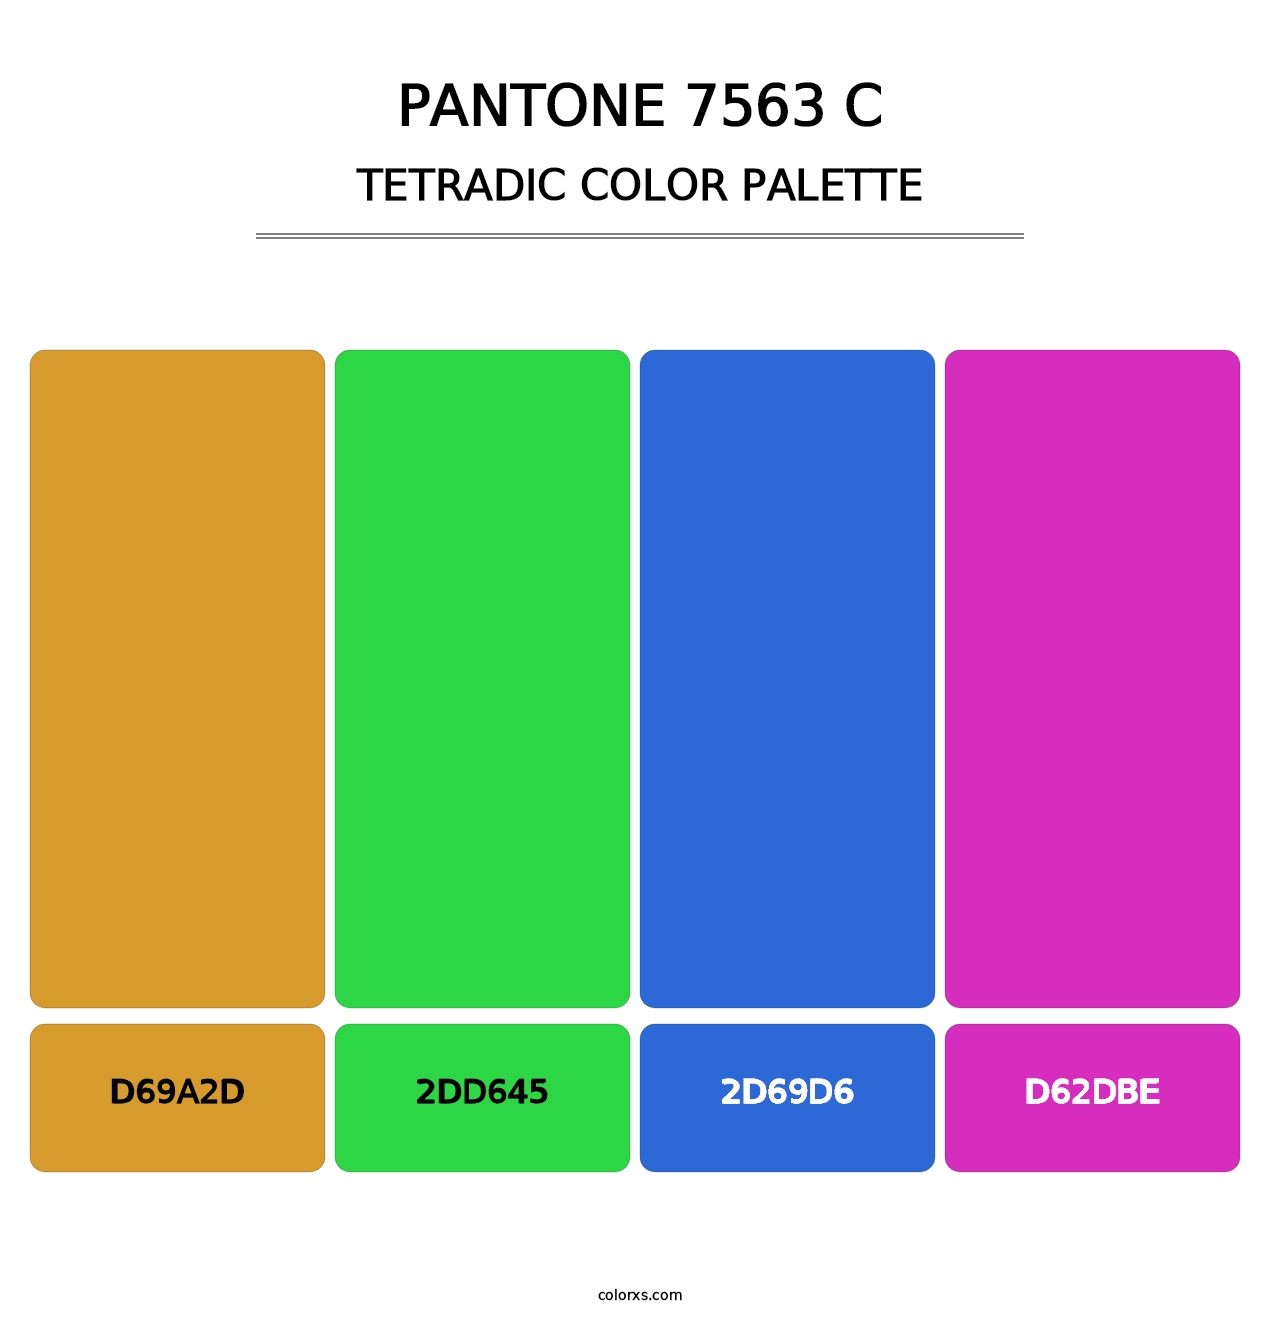 PANTONE 7563 C - Tetradic Color Palette